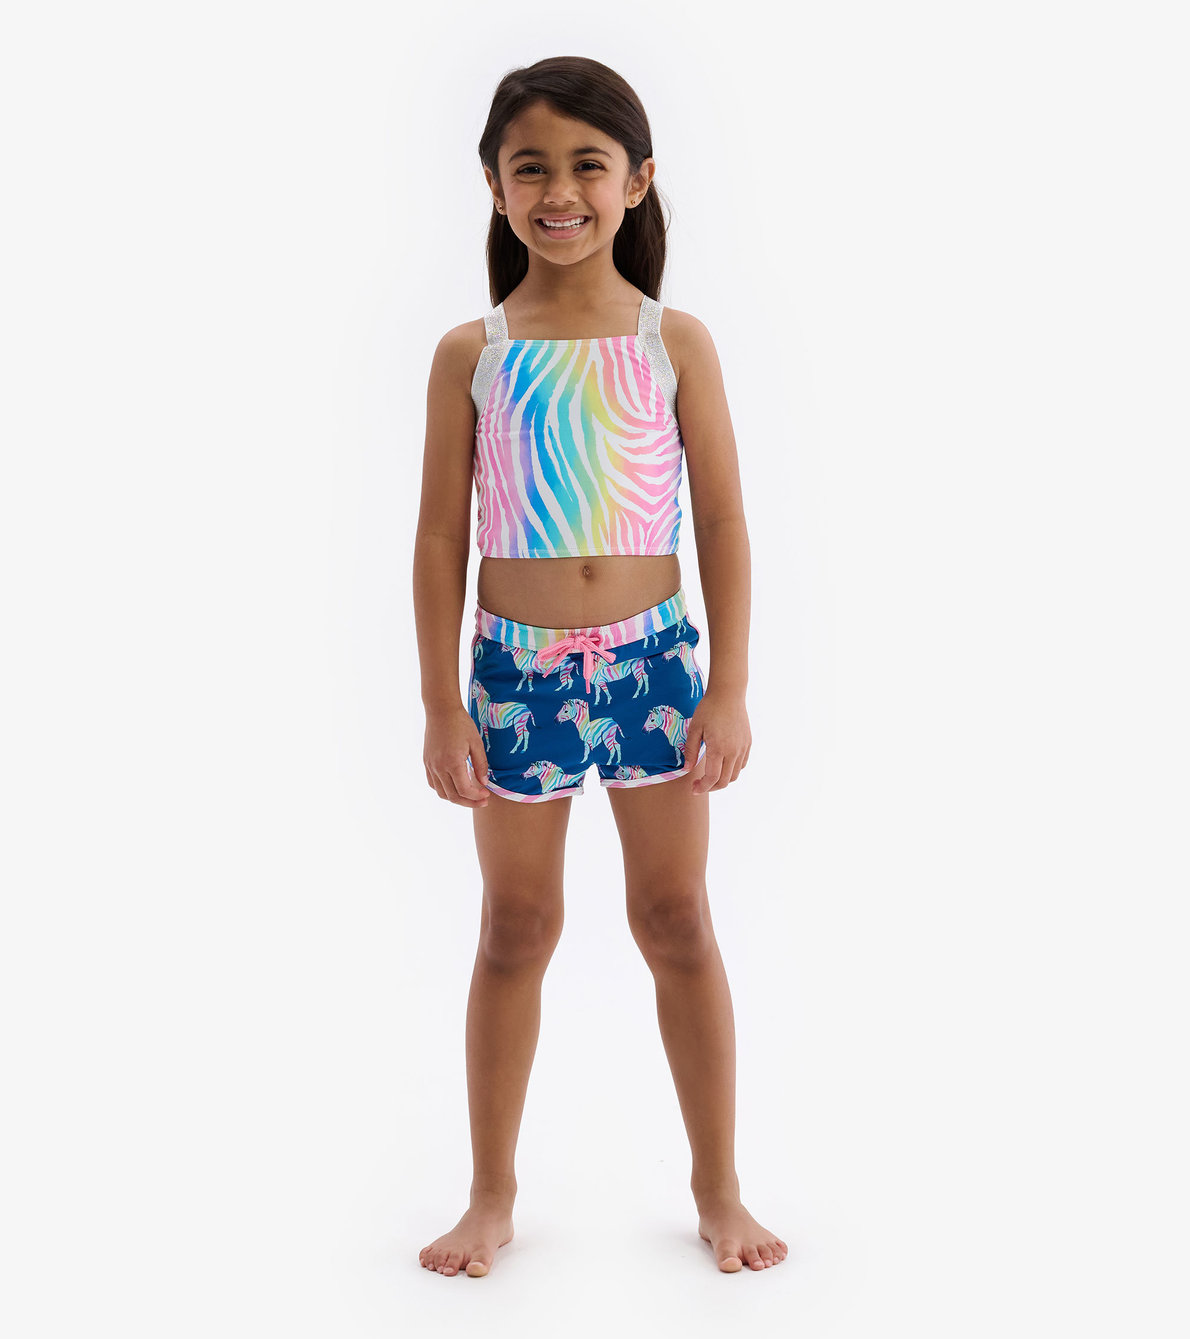 View larger image of Rainbow Zebra Swim Shorts